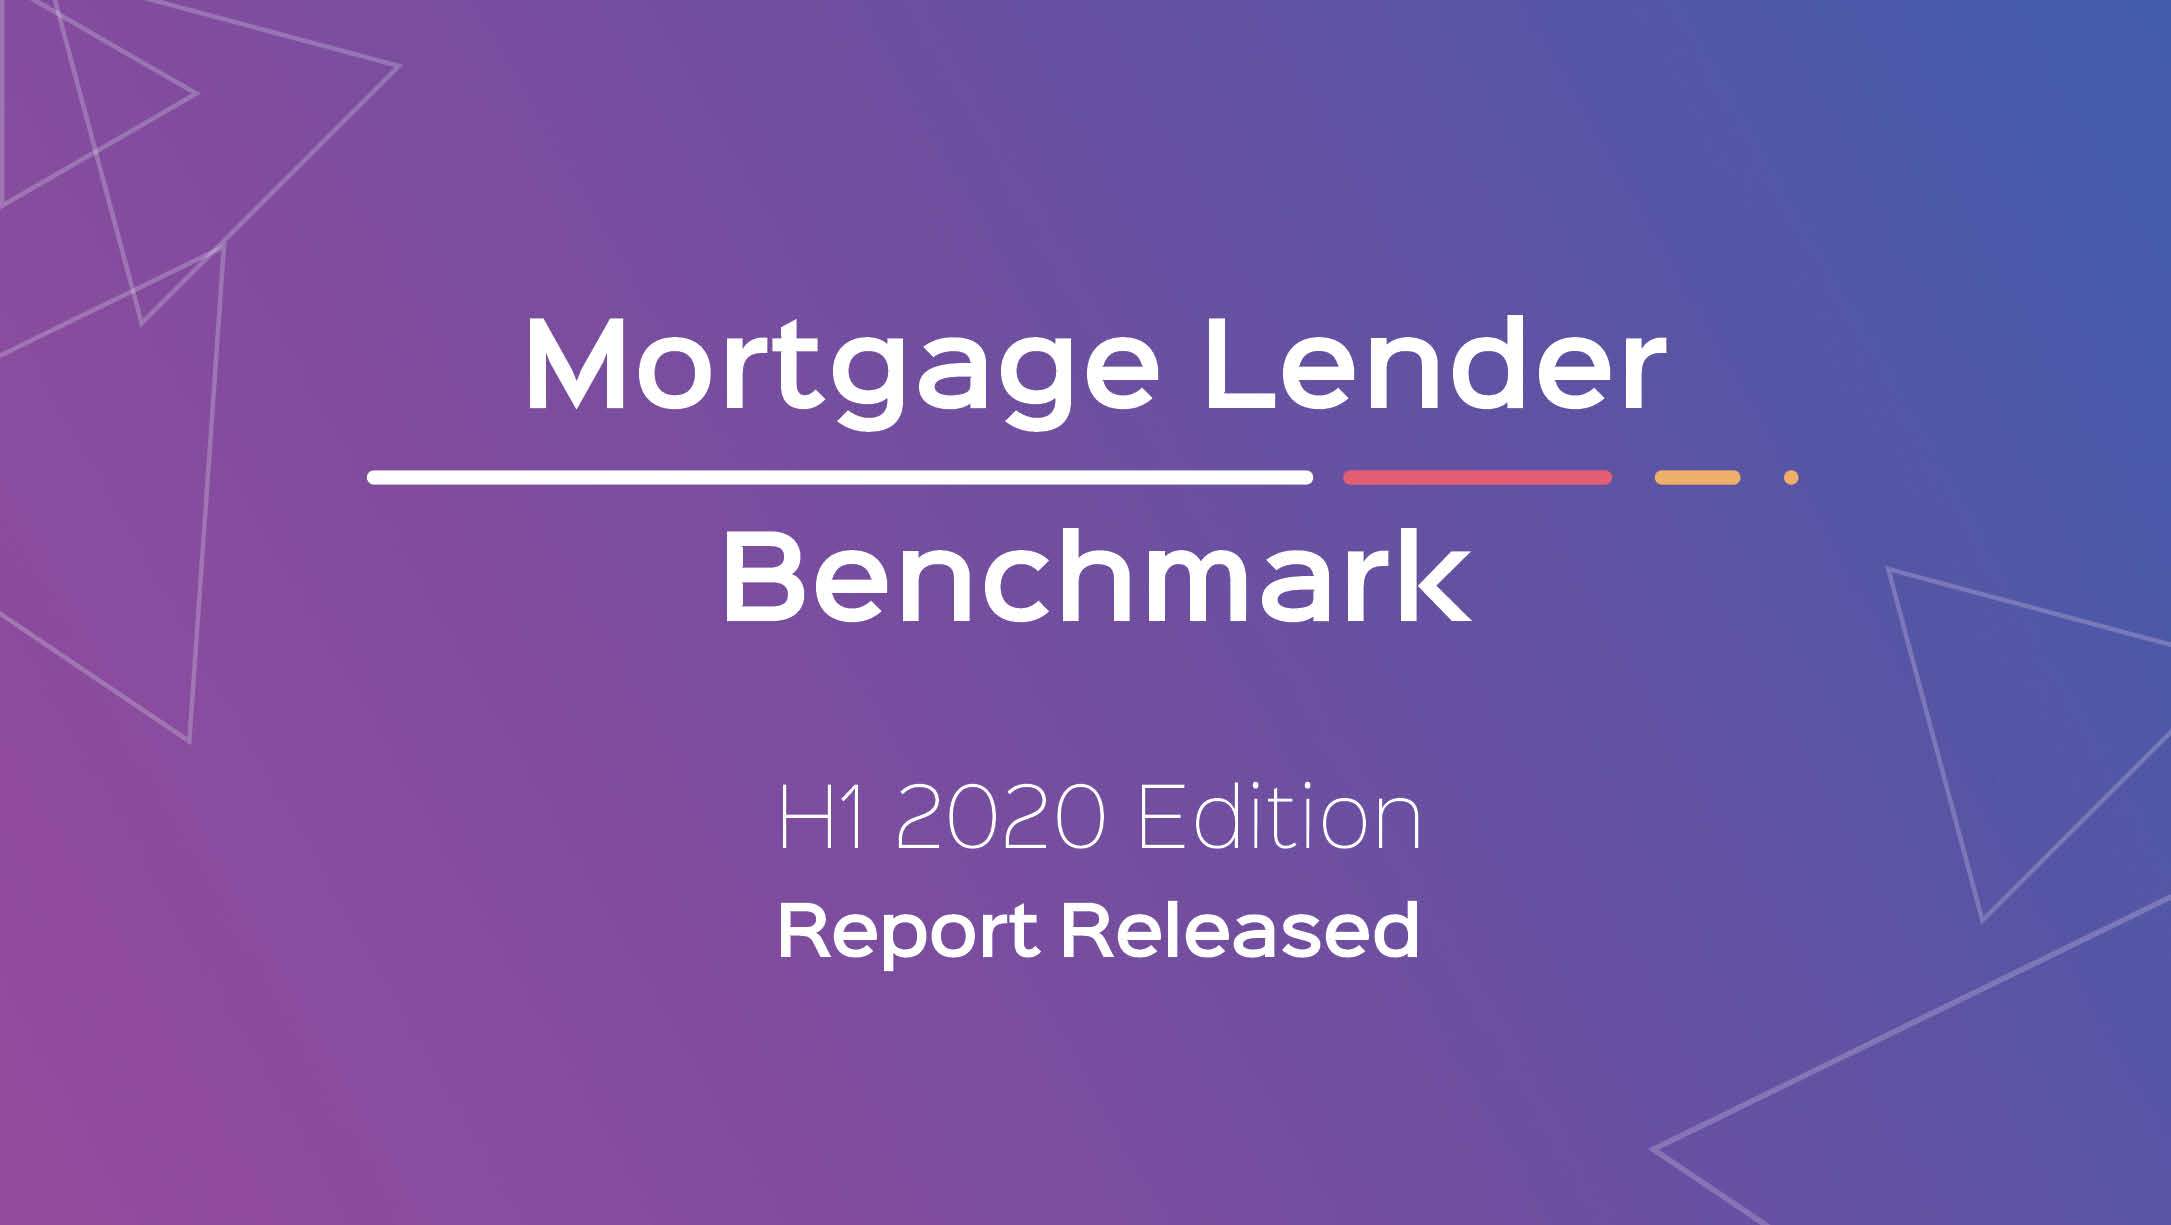 Mortgage Lender Benchmark H1 2020 Results